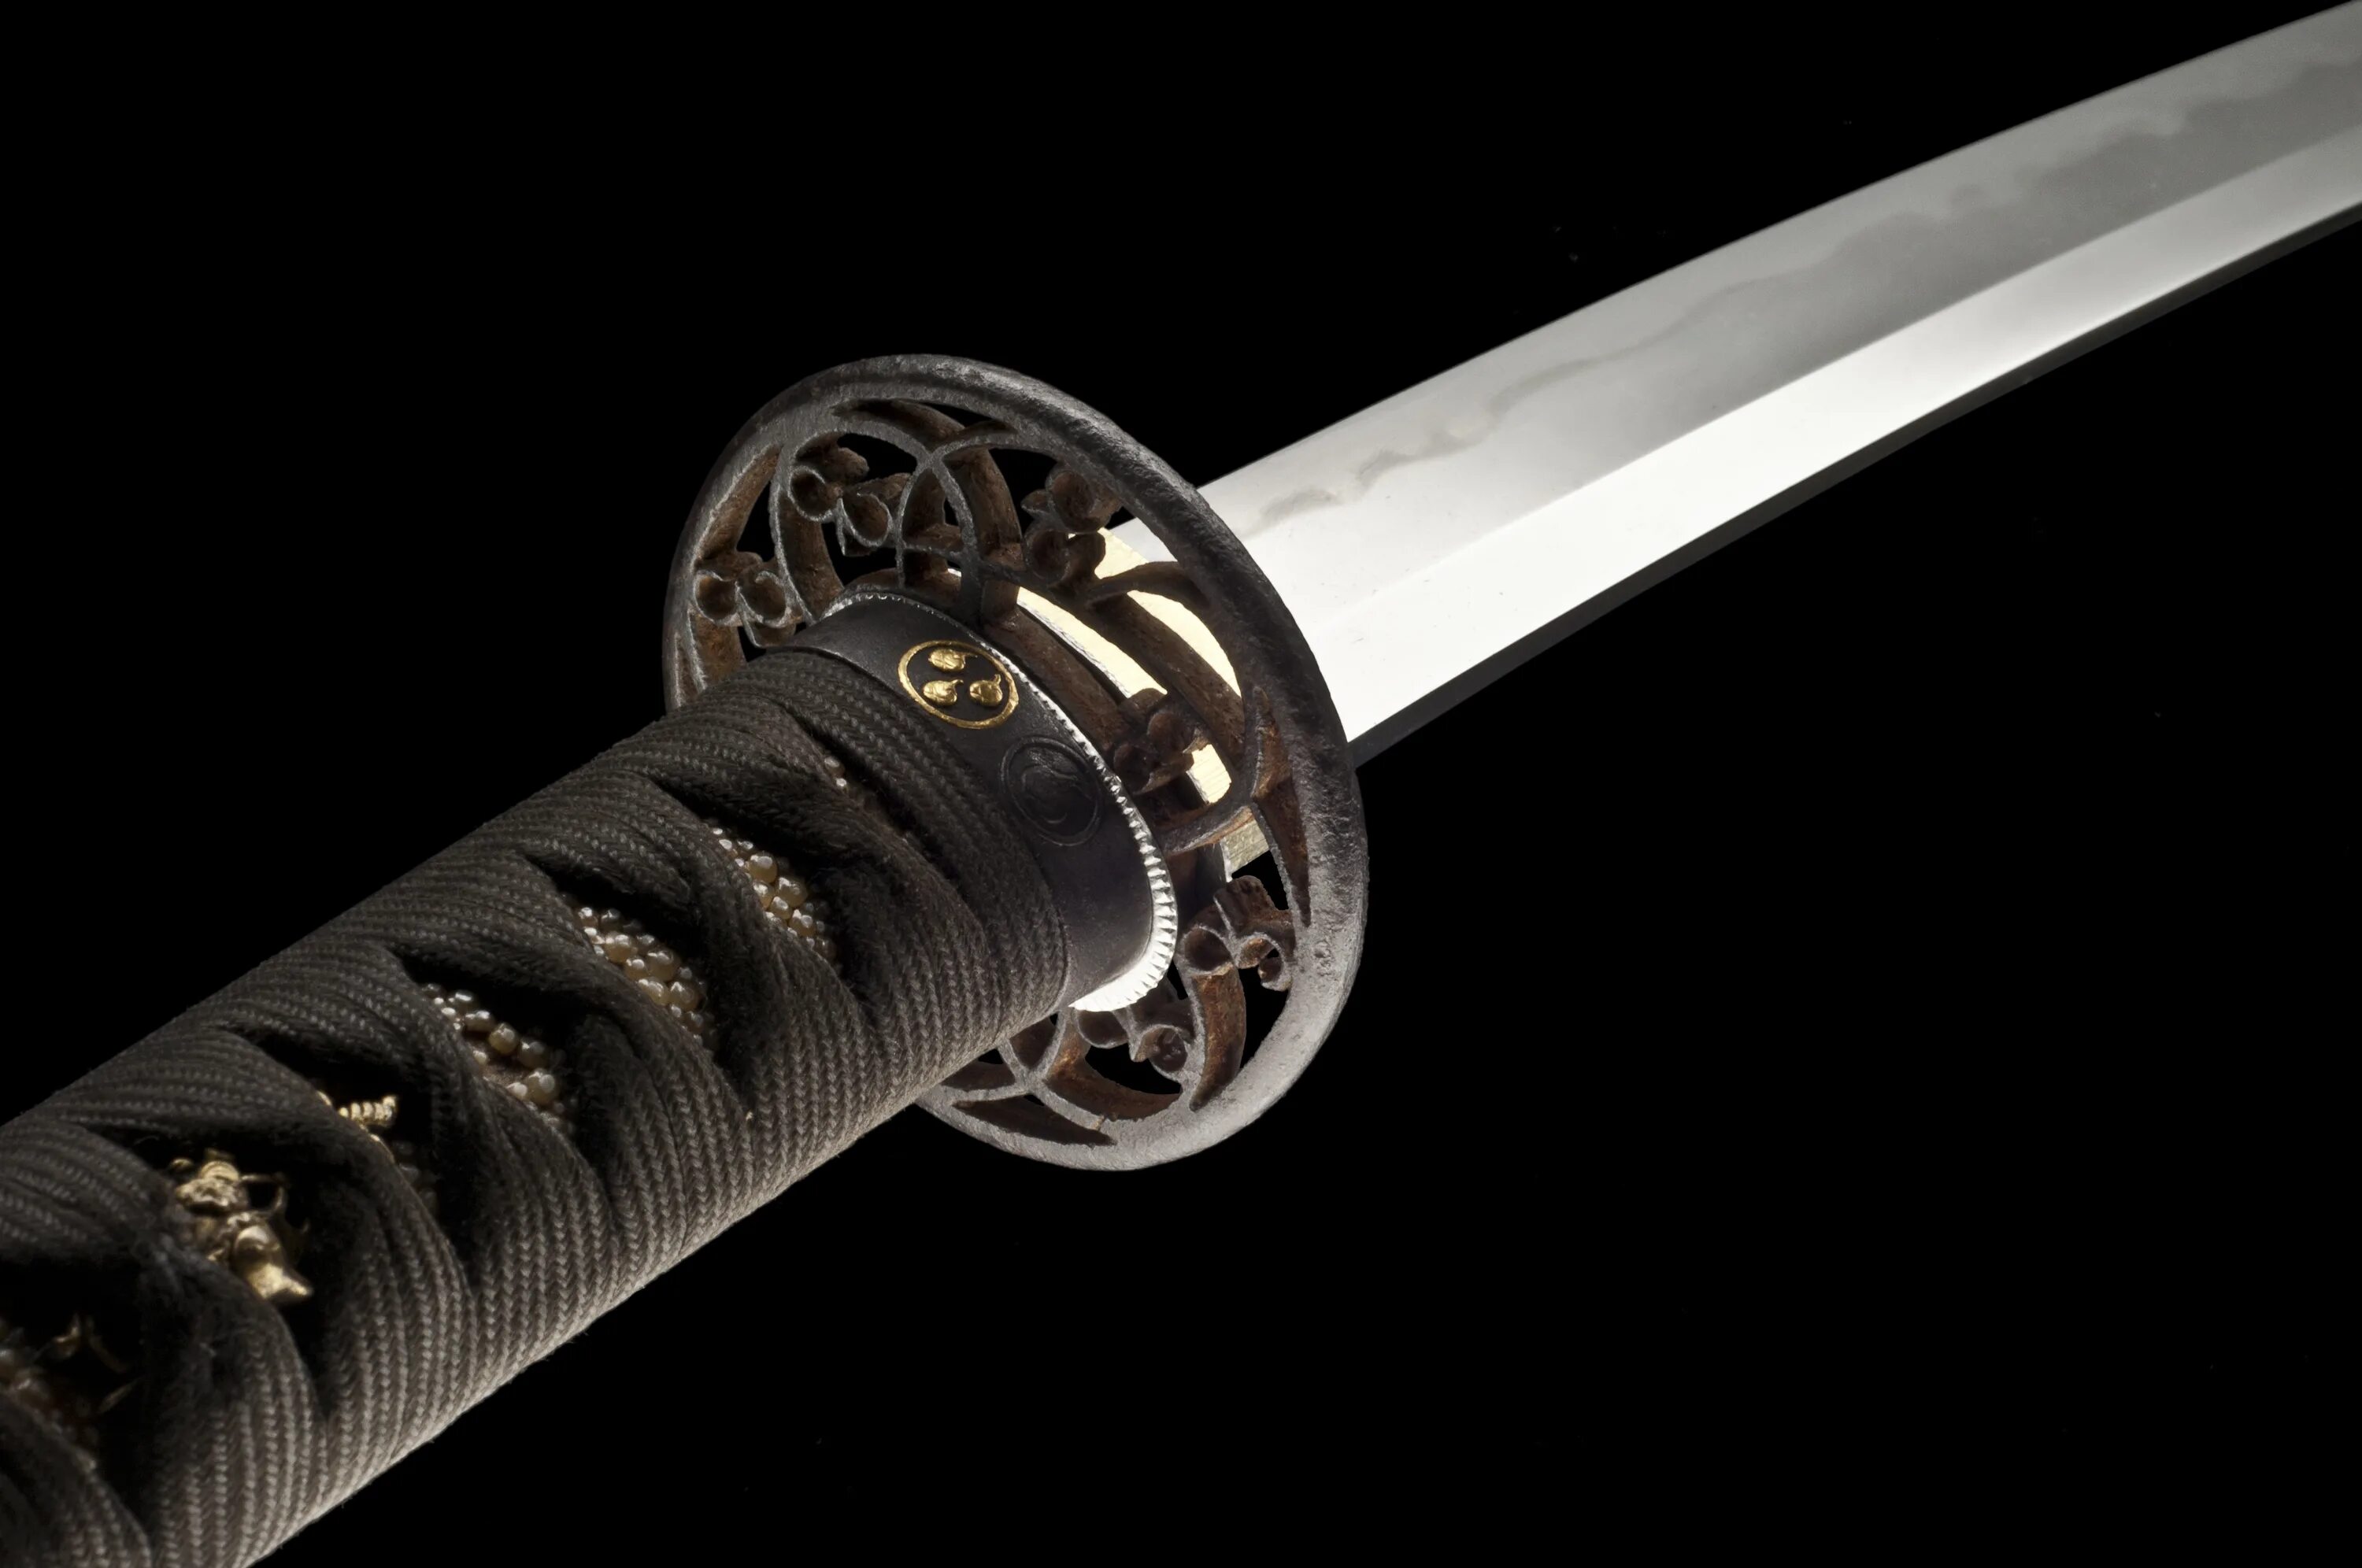 Катана и вакидзаси. Вакидзаси "черный дракон". Японский самурайский меч 16 века Wakizashi. Японский меч катана 16 века.